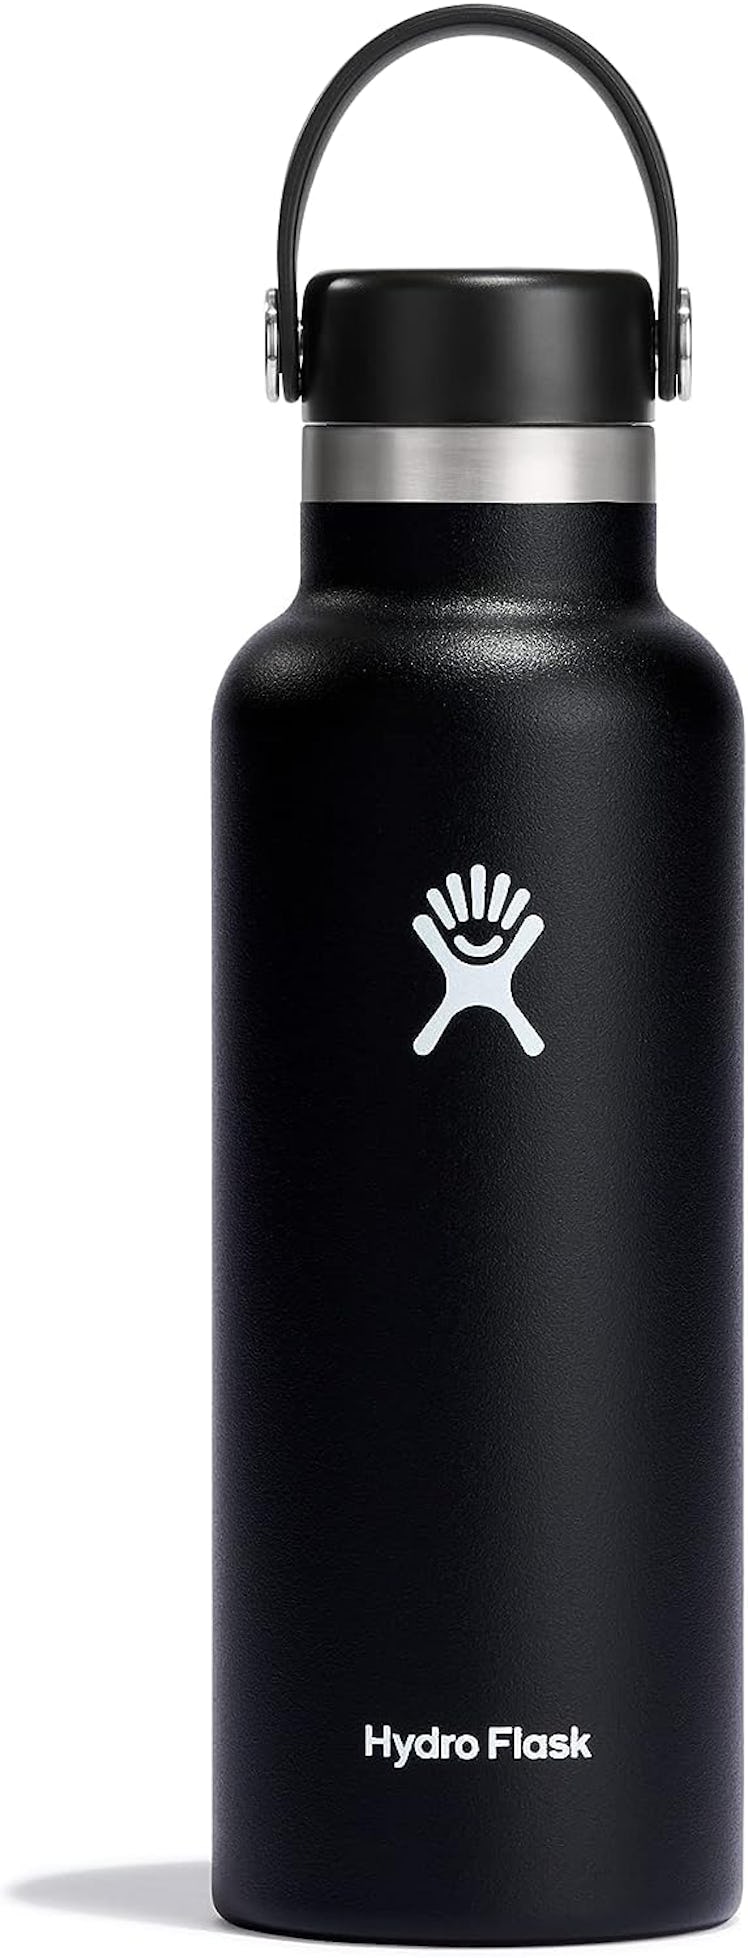 Hydro Flask Stainless Steel 18-Ounce Water Bottle